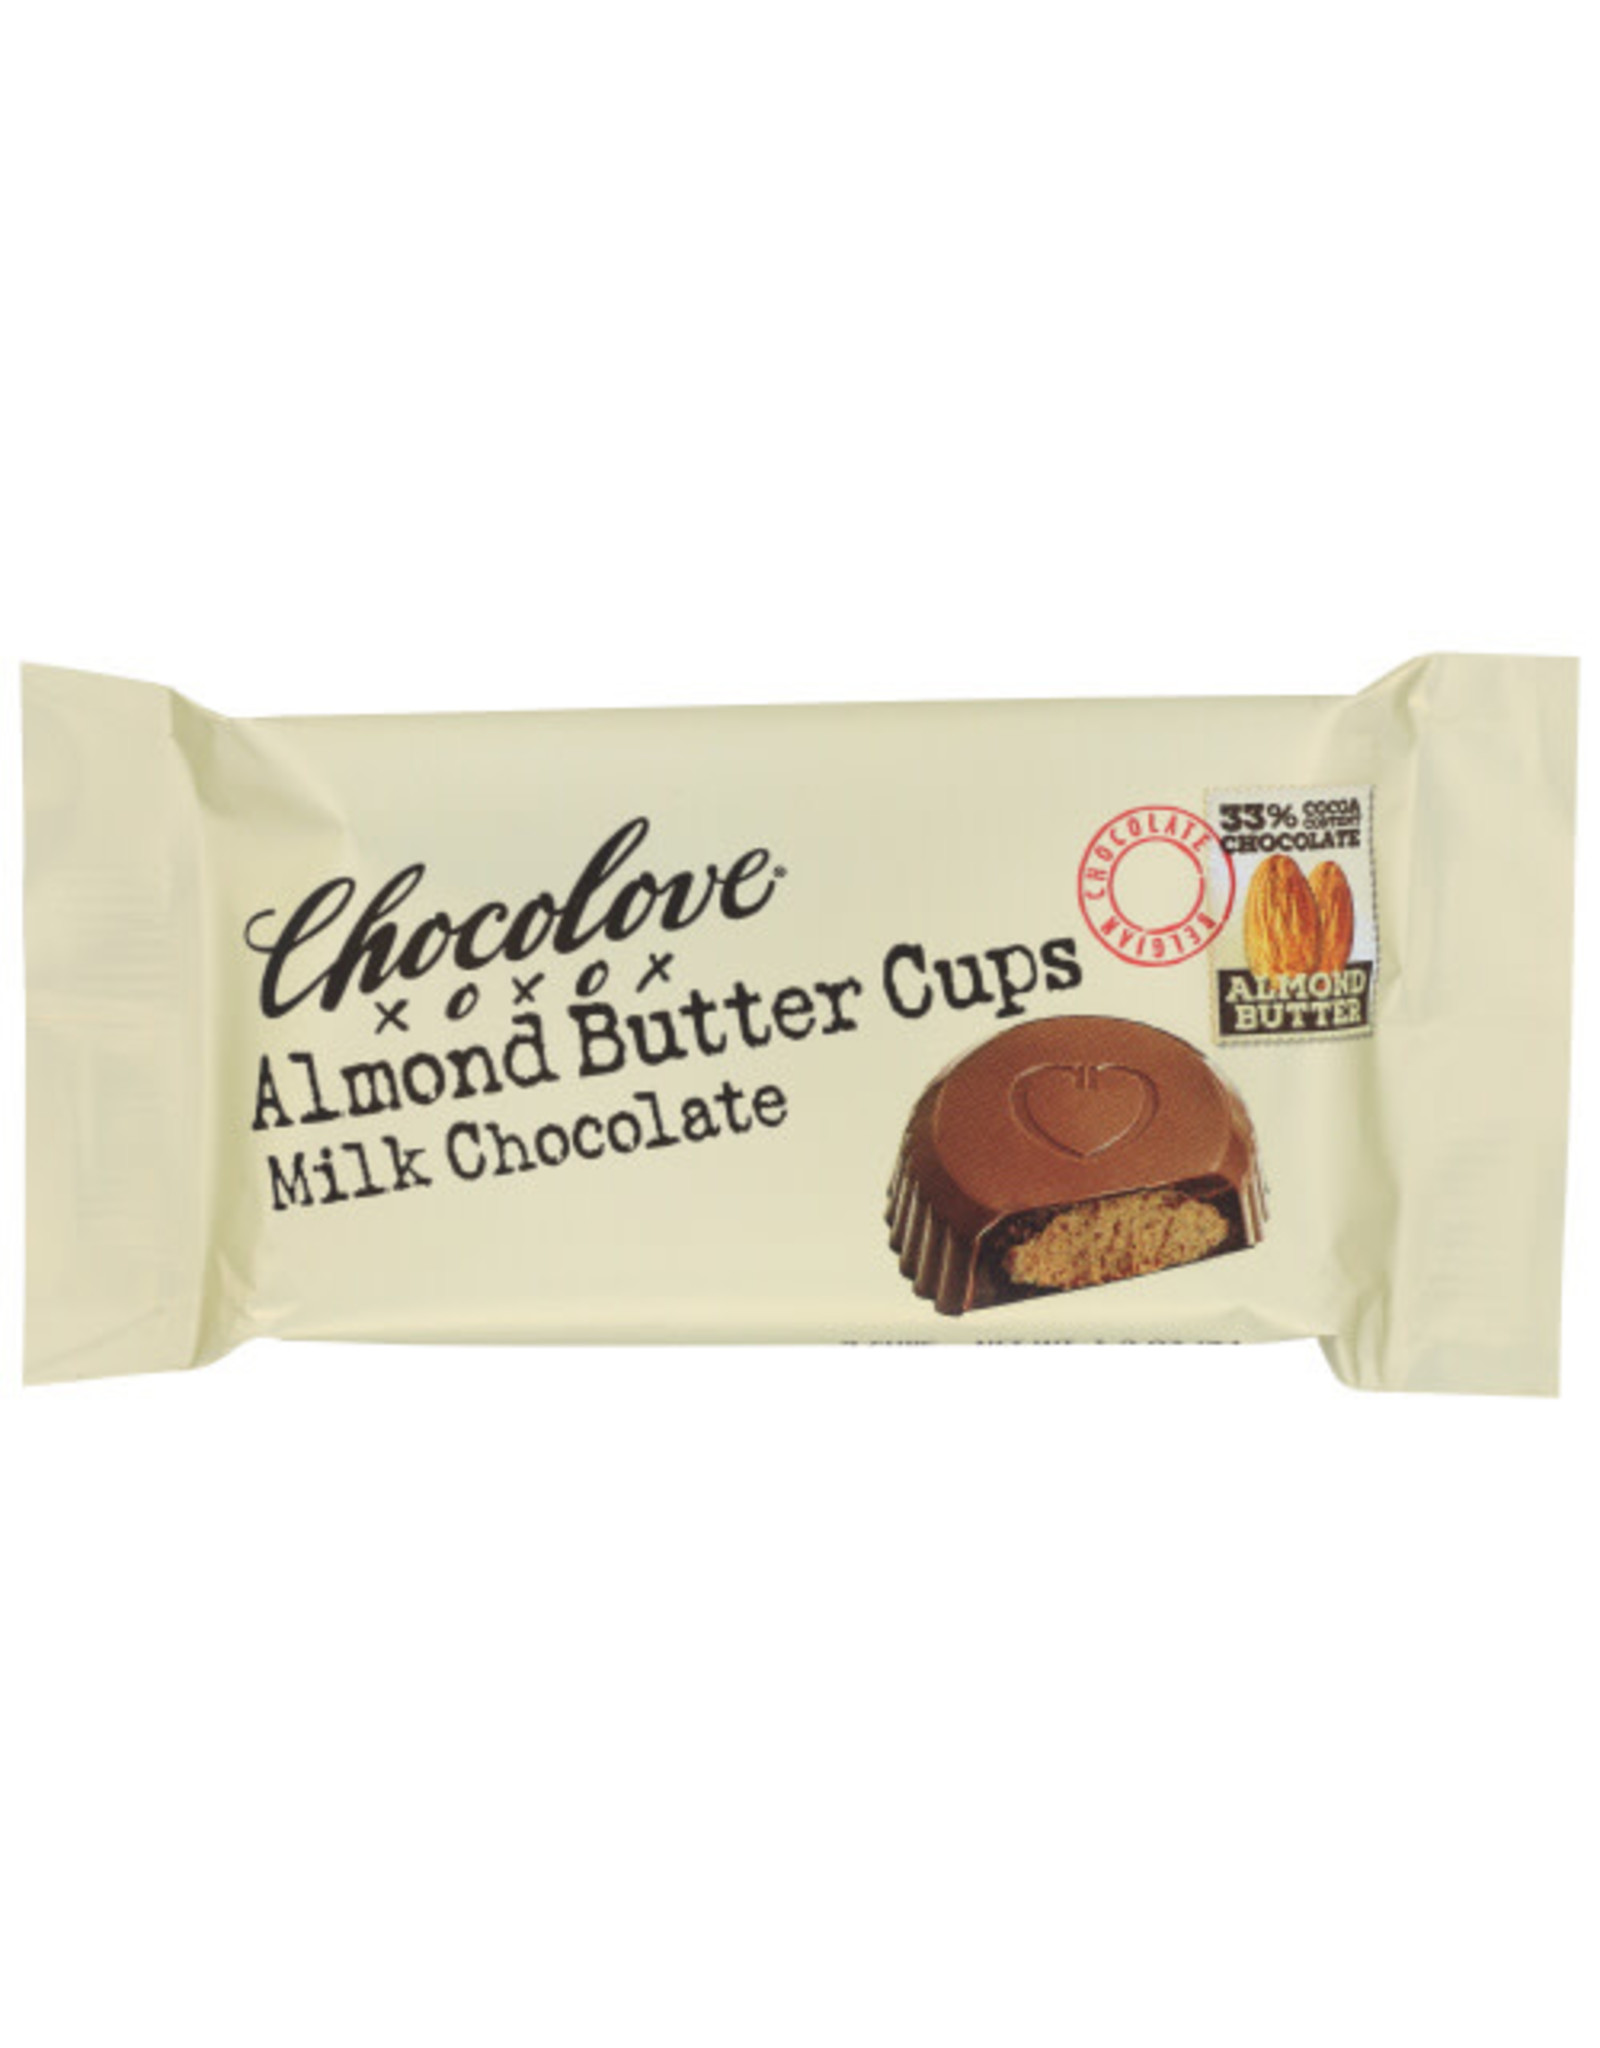 CHOCOLOVE® CHOCOLOVE NUT BUTTER CUPS, MILK CHOCOLATE, 1.2 OZ.